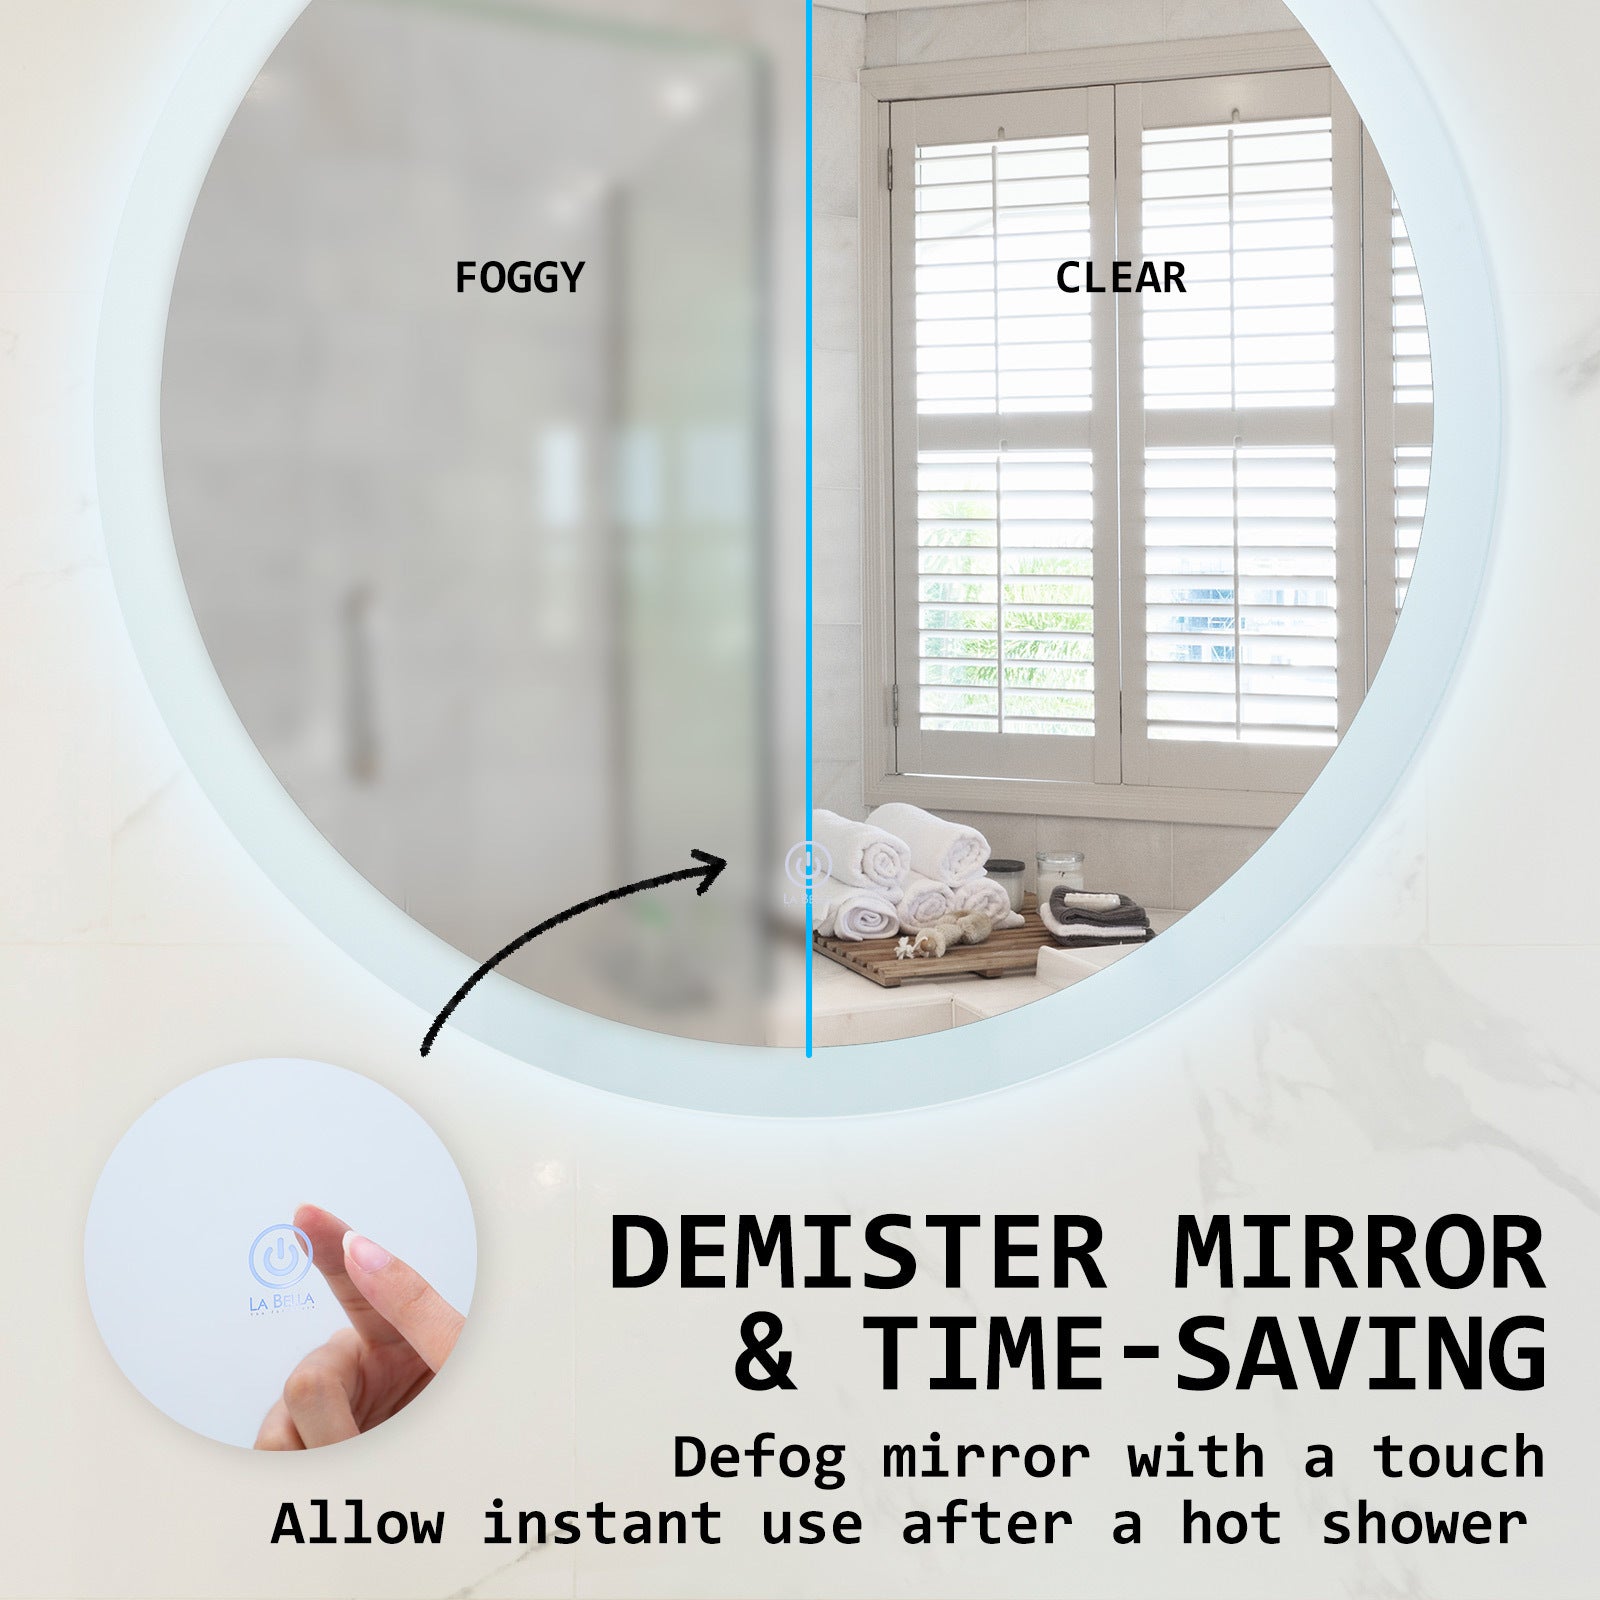 La Bella LED Wall Mirror Round Touch Anti-Fog Makeup Decor Bathroom Vanity 70cm - SILBERSHELL